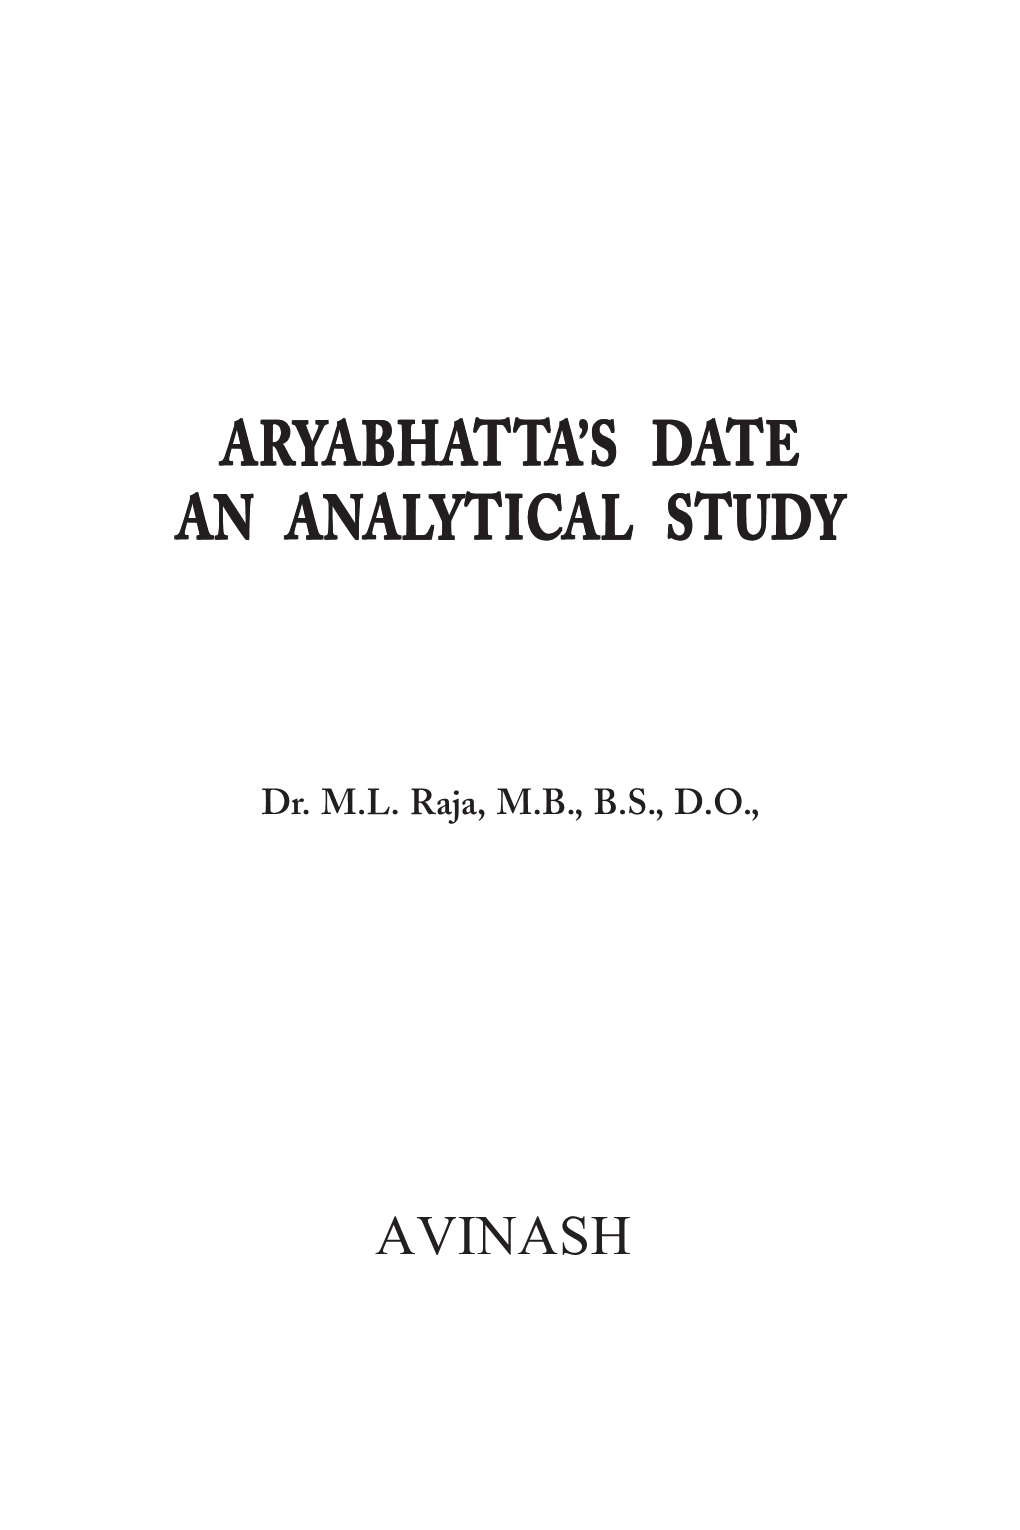 Aryabhatta Date an Analytical Study